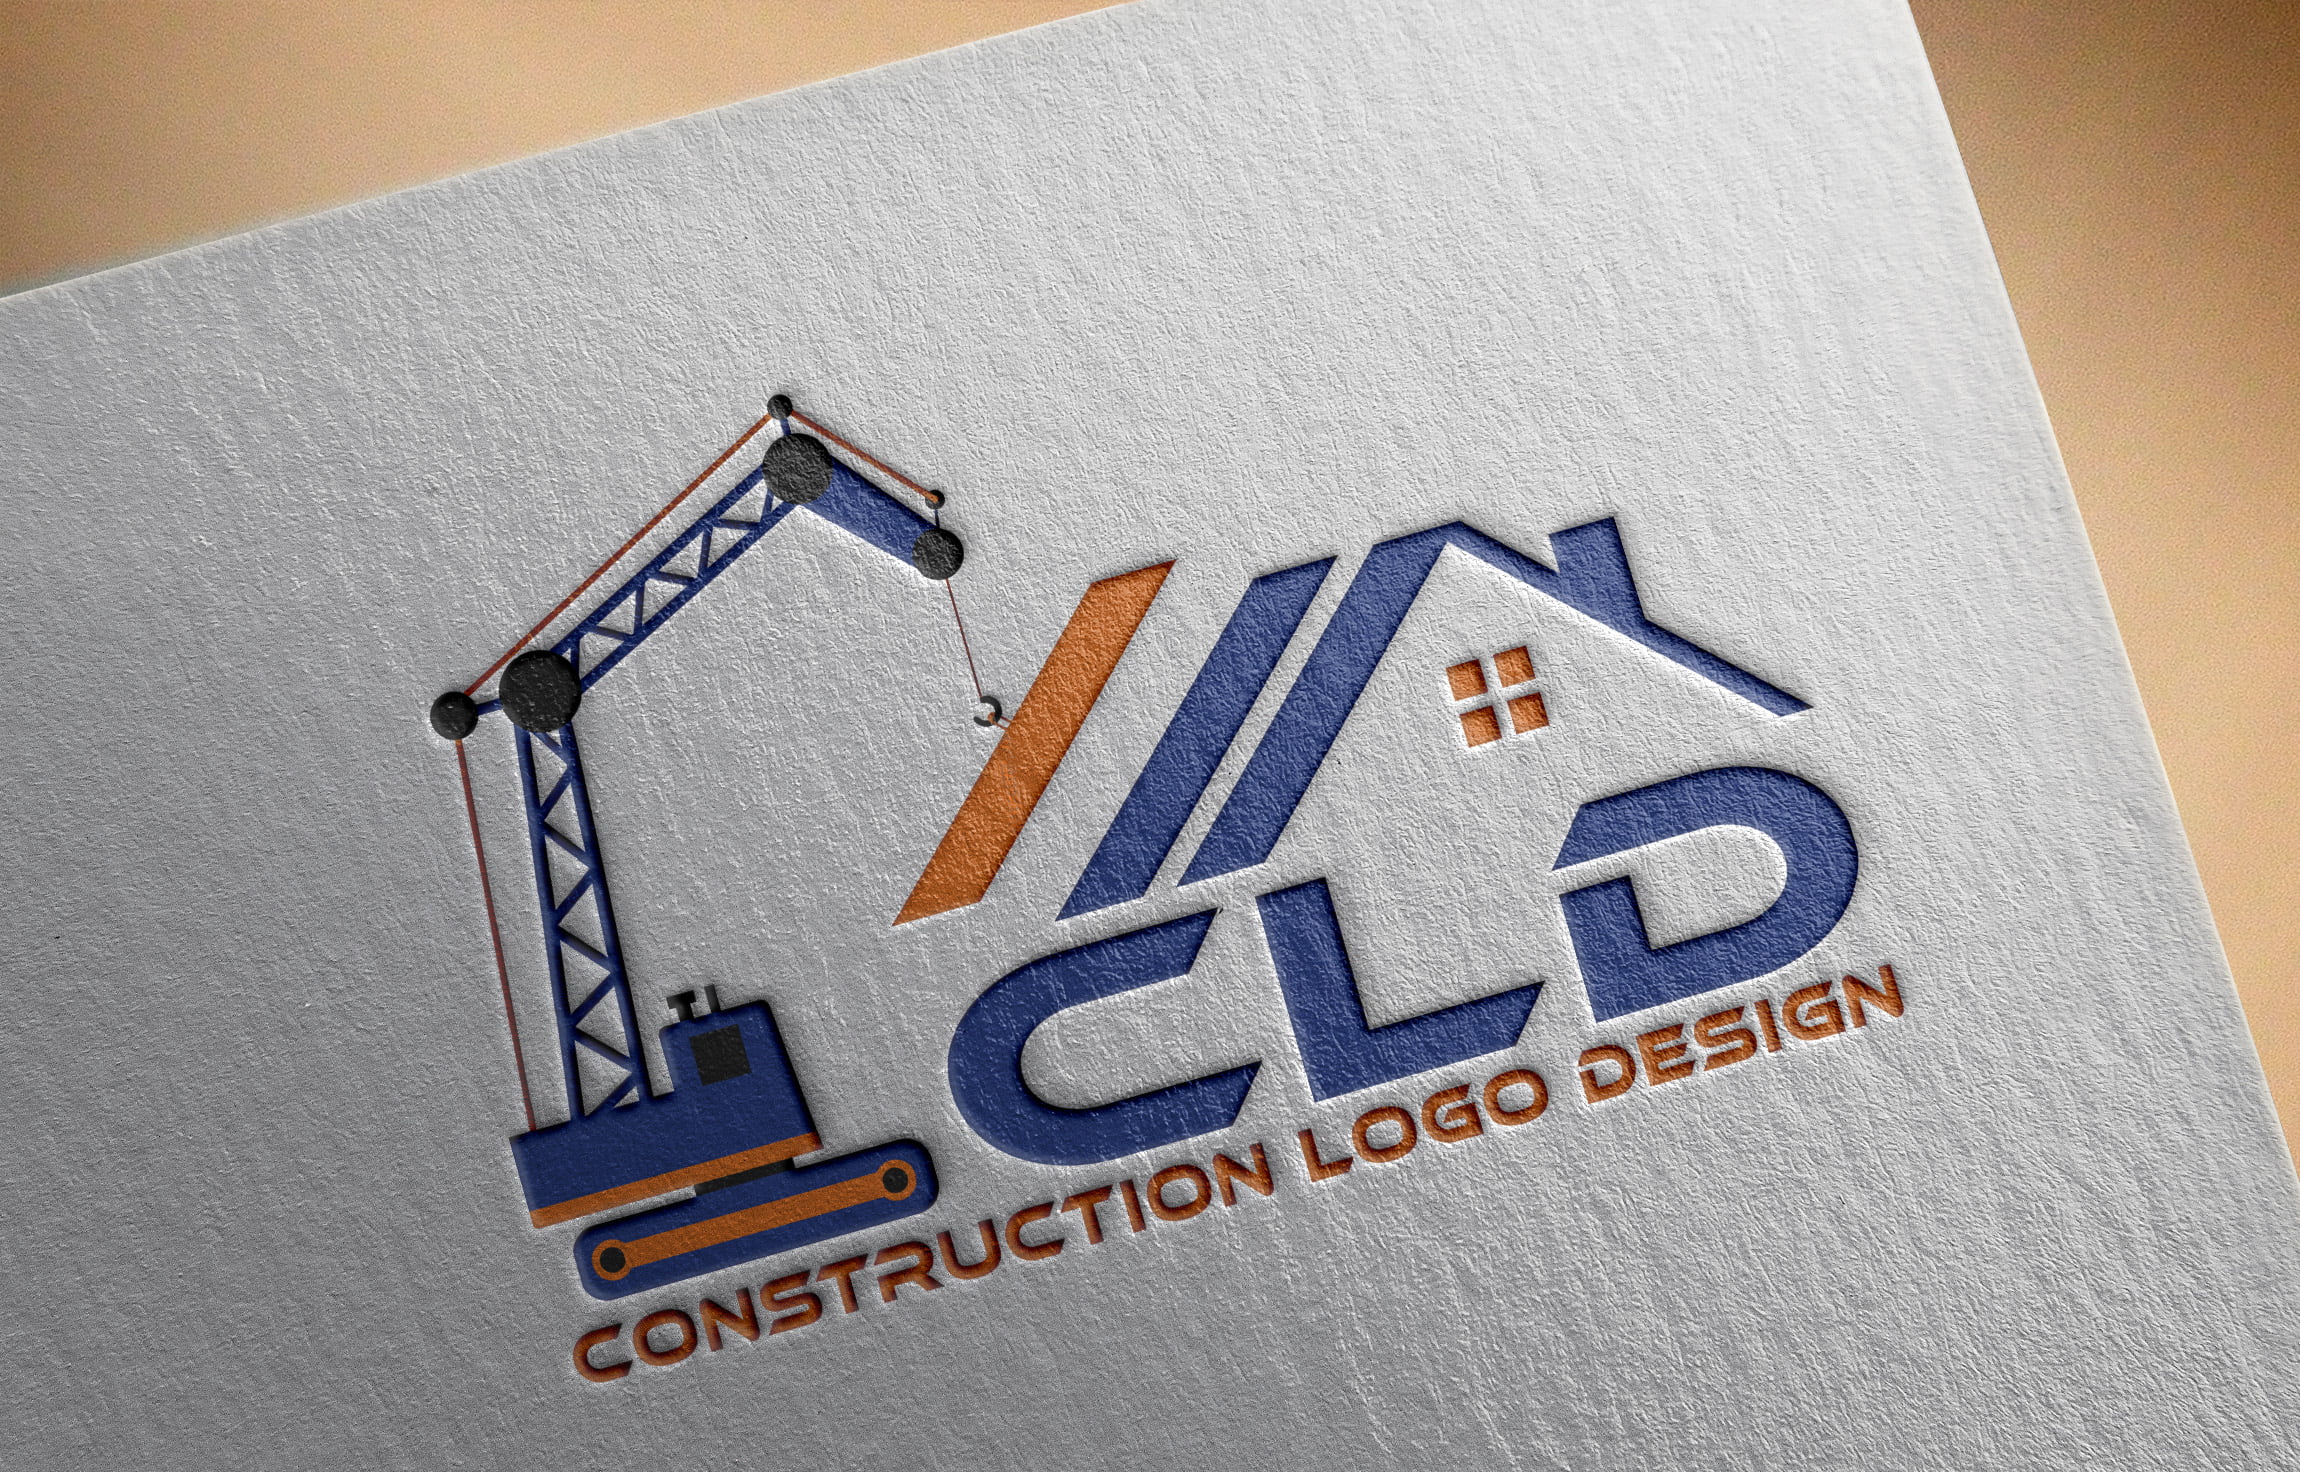 Construction Logo Ideas  Construction Company Logo Ideas